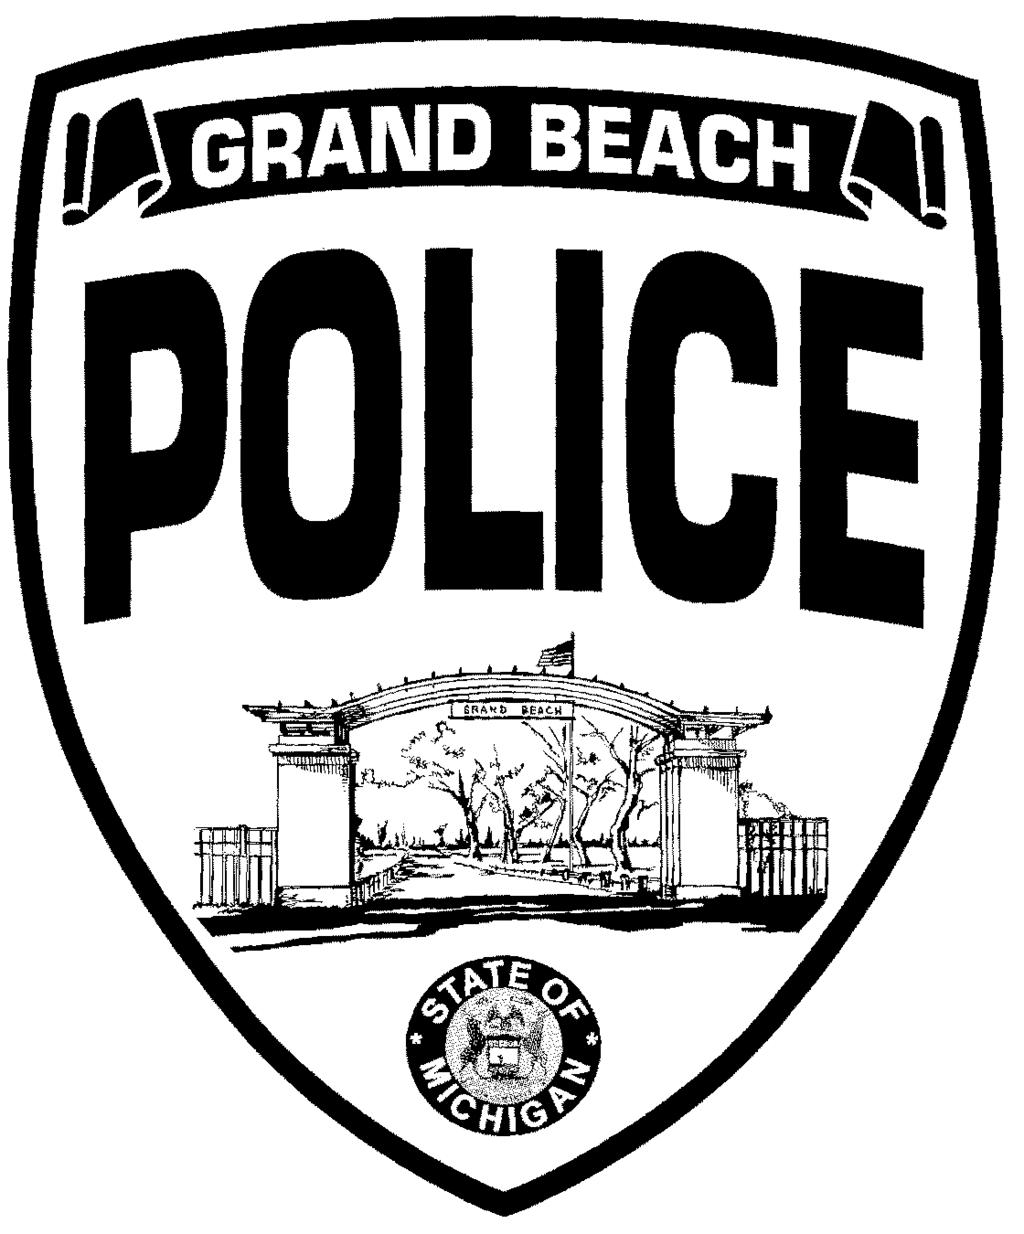 GRAND BEACH POLICE DEPARTMENT 48200 PERKINS BLVD. GRAND BEACH, MI 49117 PHONE: 866-630-7679 (Dispatch) OR 269-469-5000 (Office) FAX: 480-393-4053 EMERGENCY: 9-1-1 EMAIL: police@grandbeach.